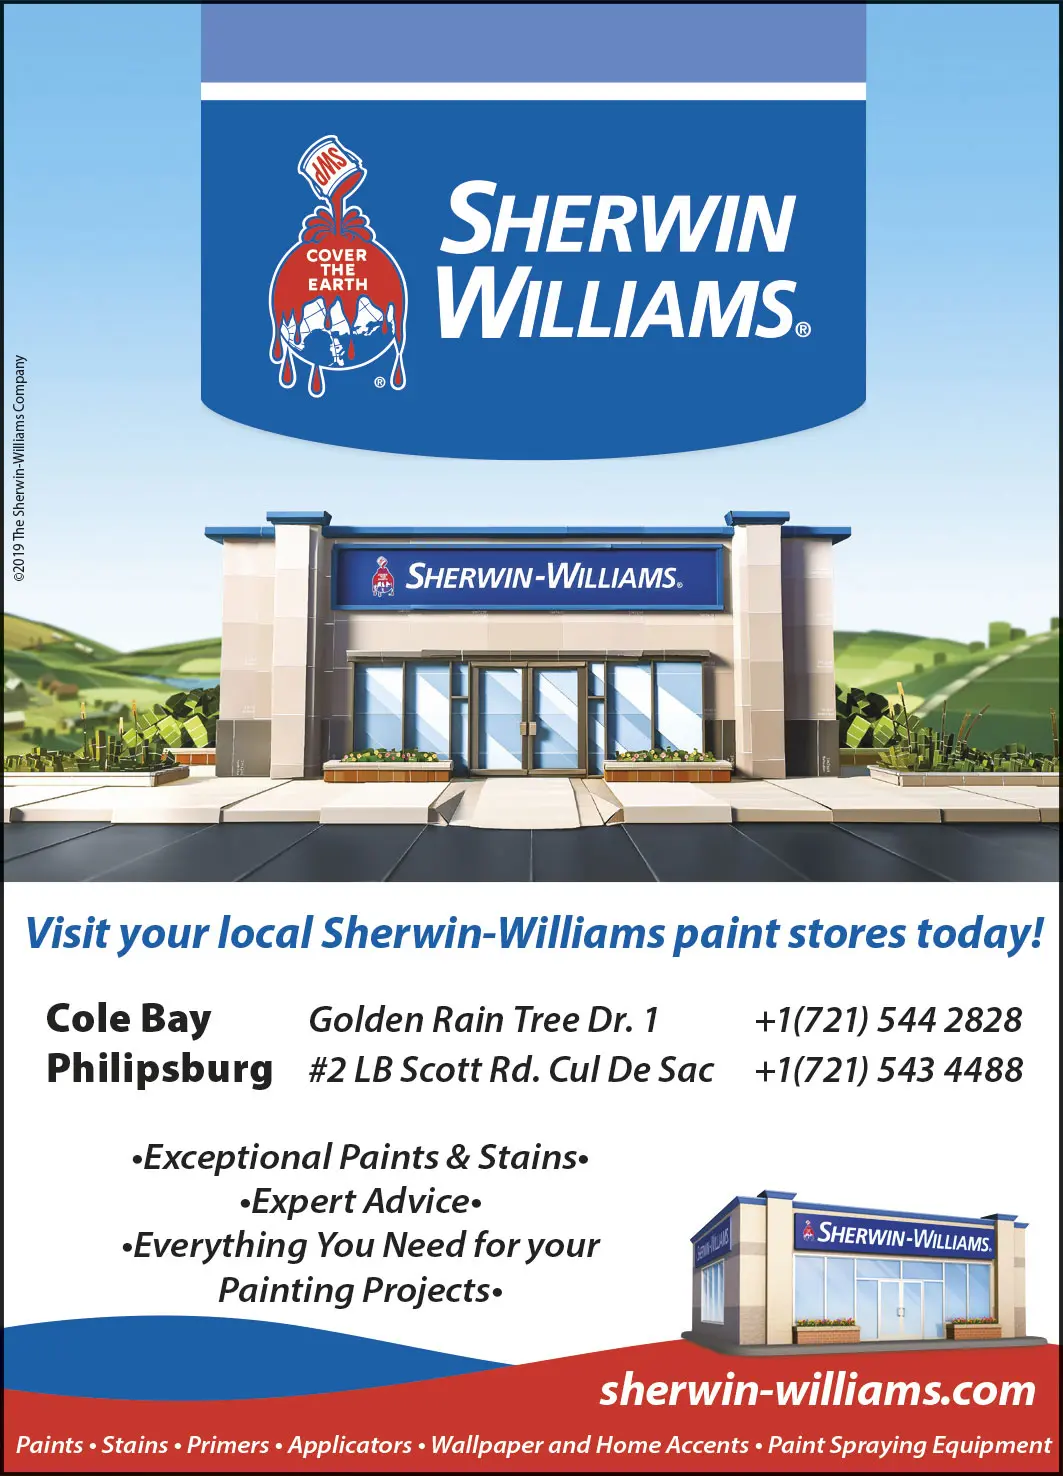 St Maarten Telephone Directory - Sherwin Williams